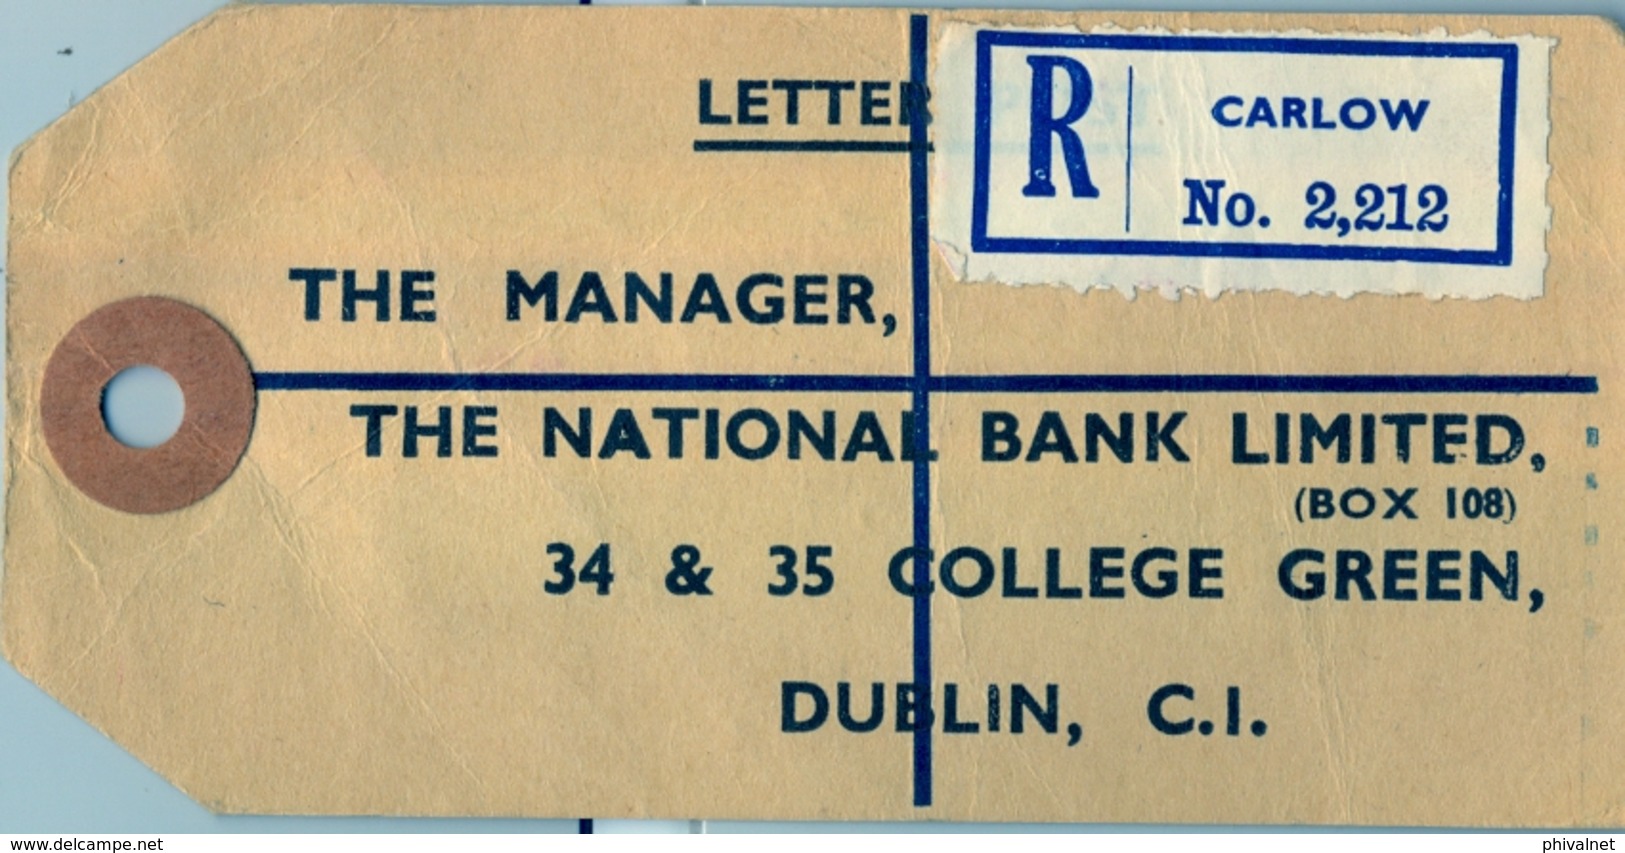 1963 , IRLANDA , ETIQUETA POSTAL DE ENVIO CERTIFICADO , CARLOW - DUBLIN , MAT. CEATHARLACH , THE NATIONAL BANK LIMITED - Covers & Documents